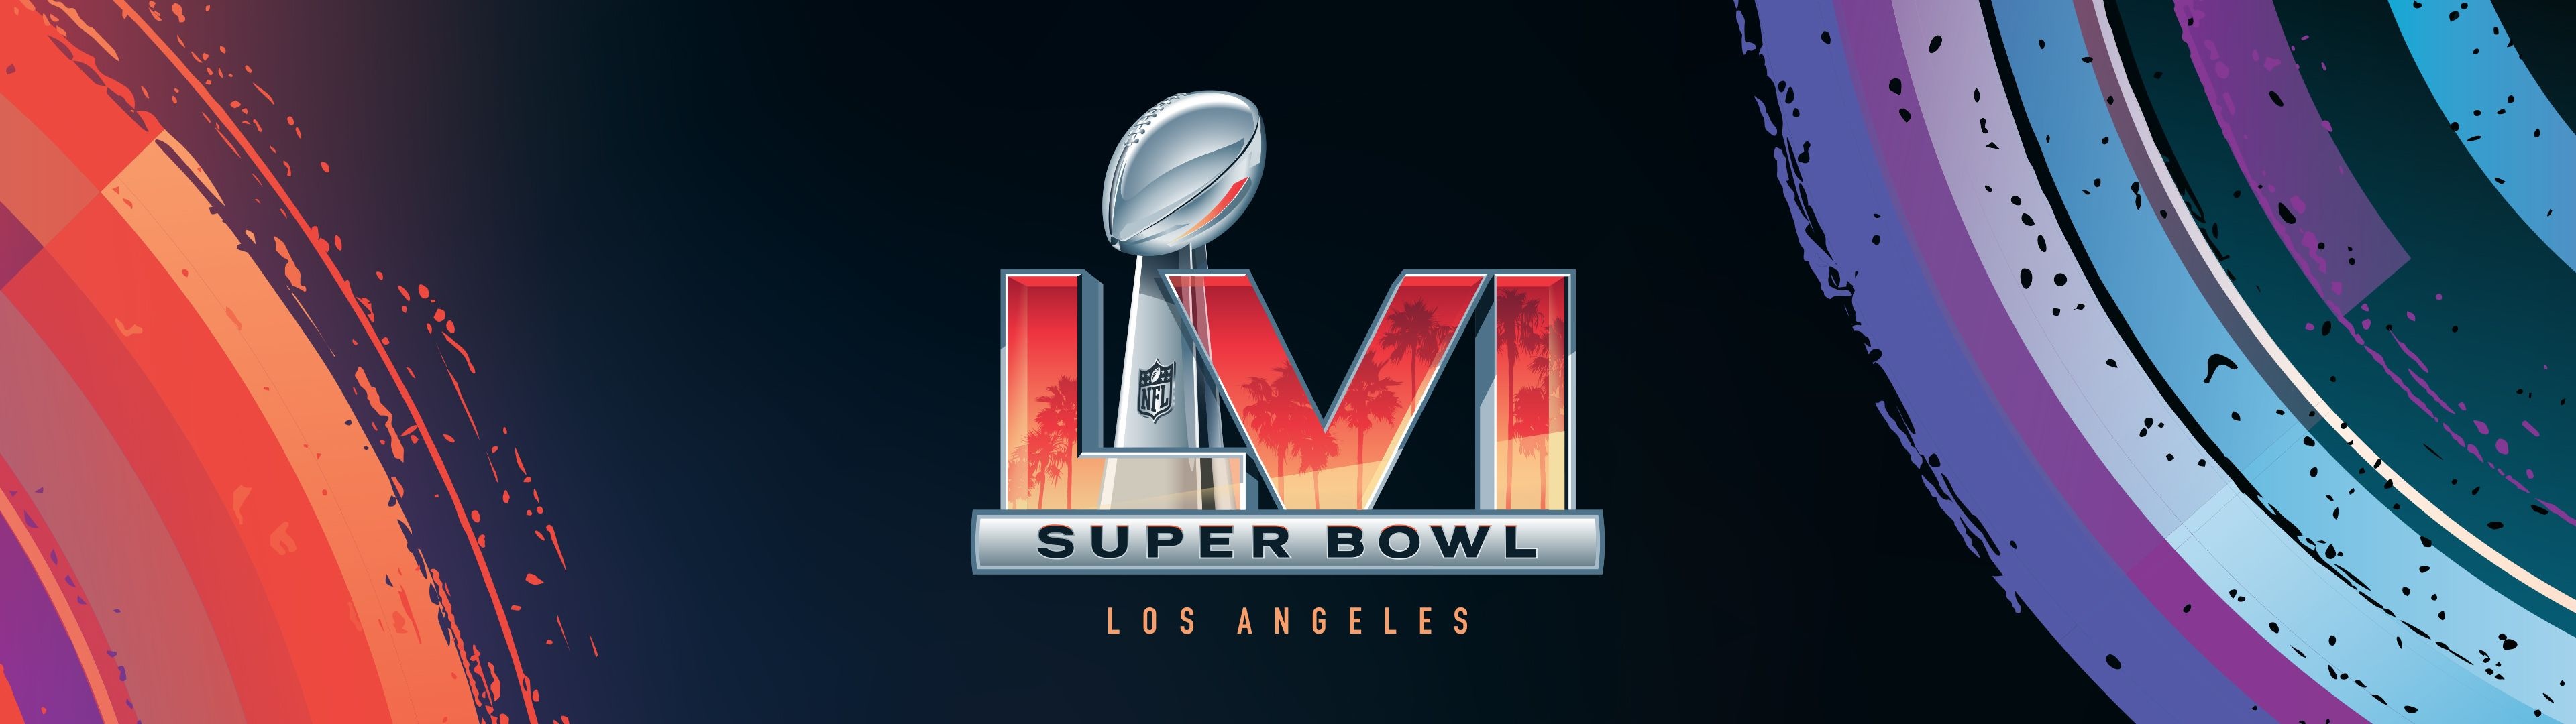 Super Bowl LVI, Football championship, Los Angeles host city, Thrilling atmosphere, 3840x1080 Dual Screen Desktop